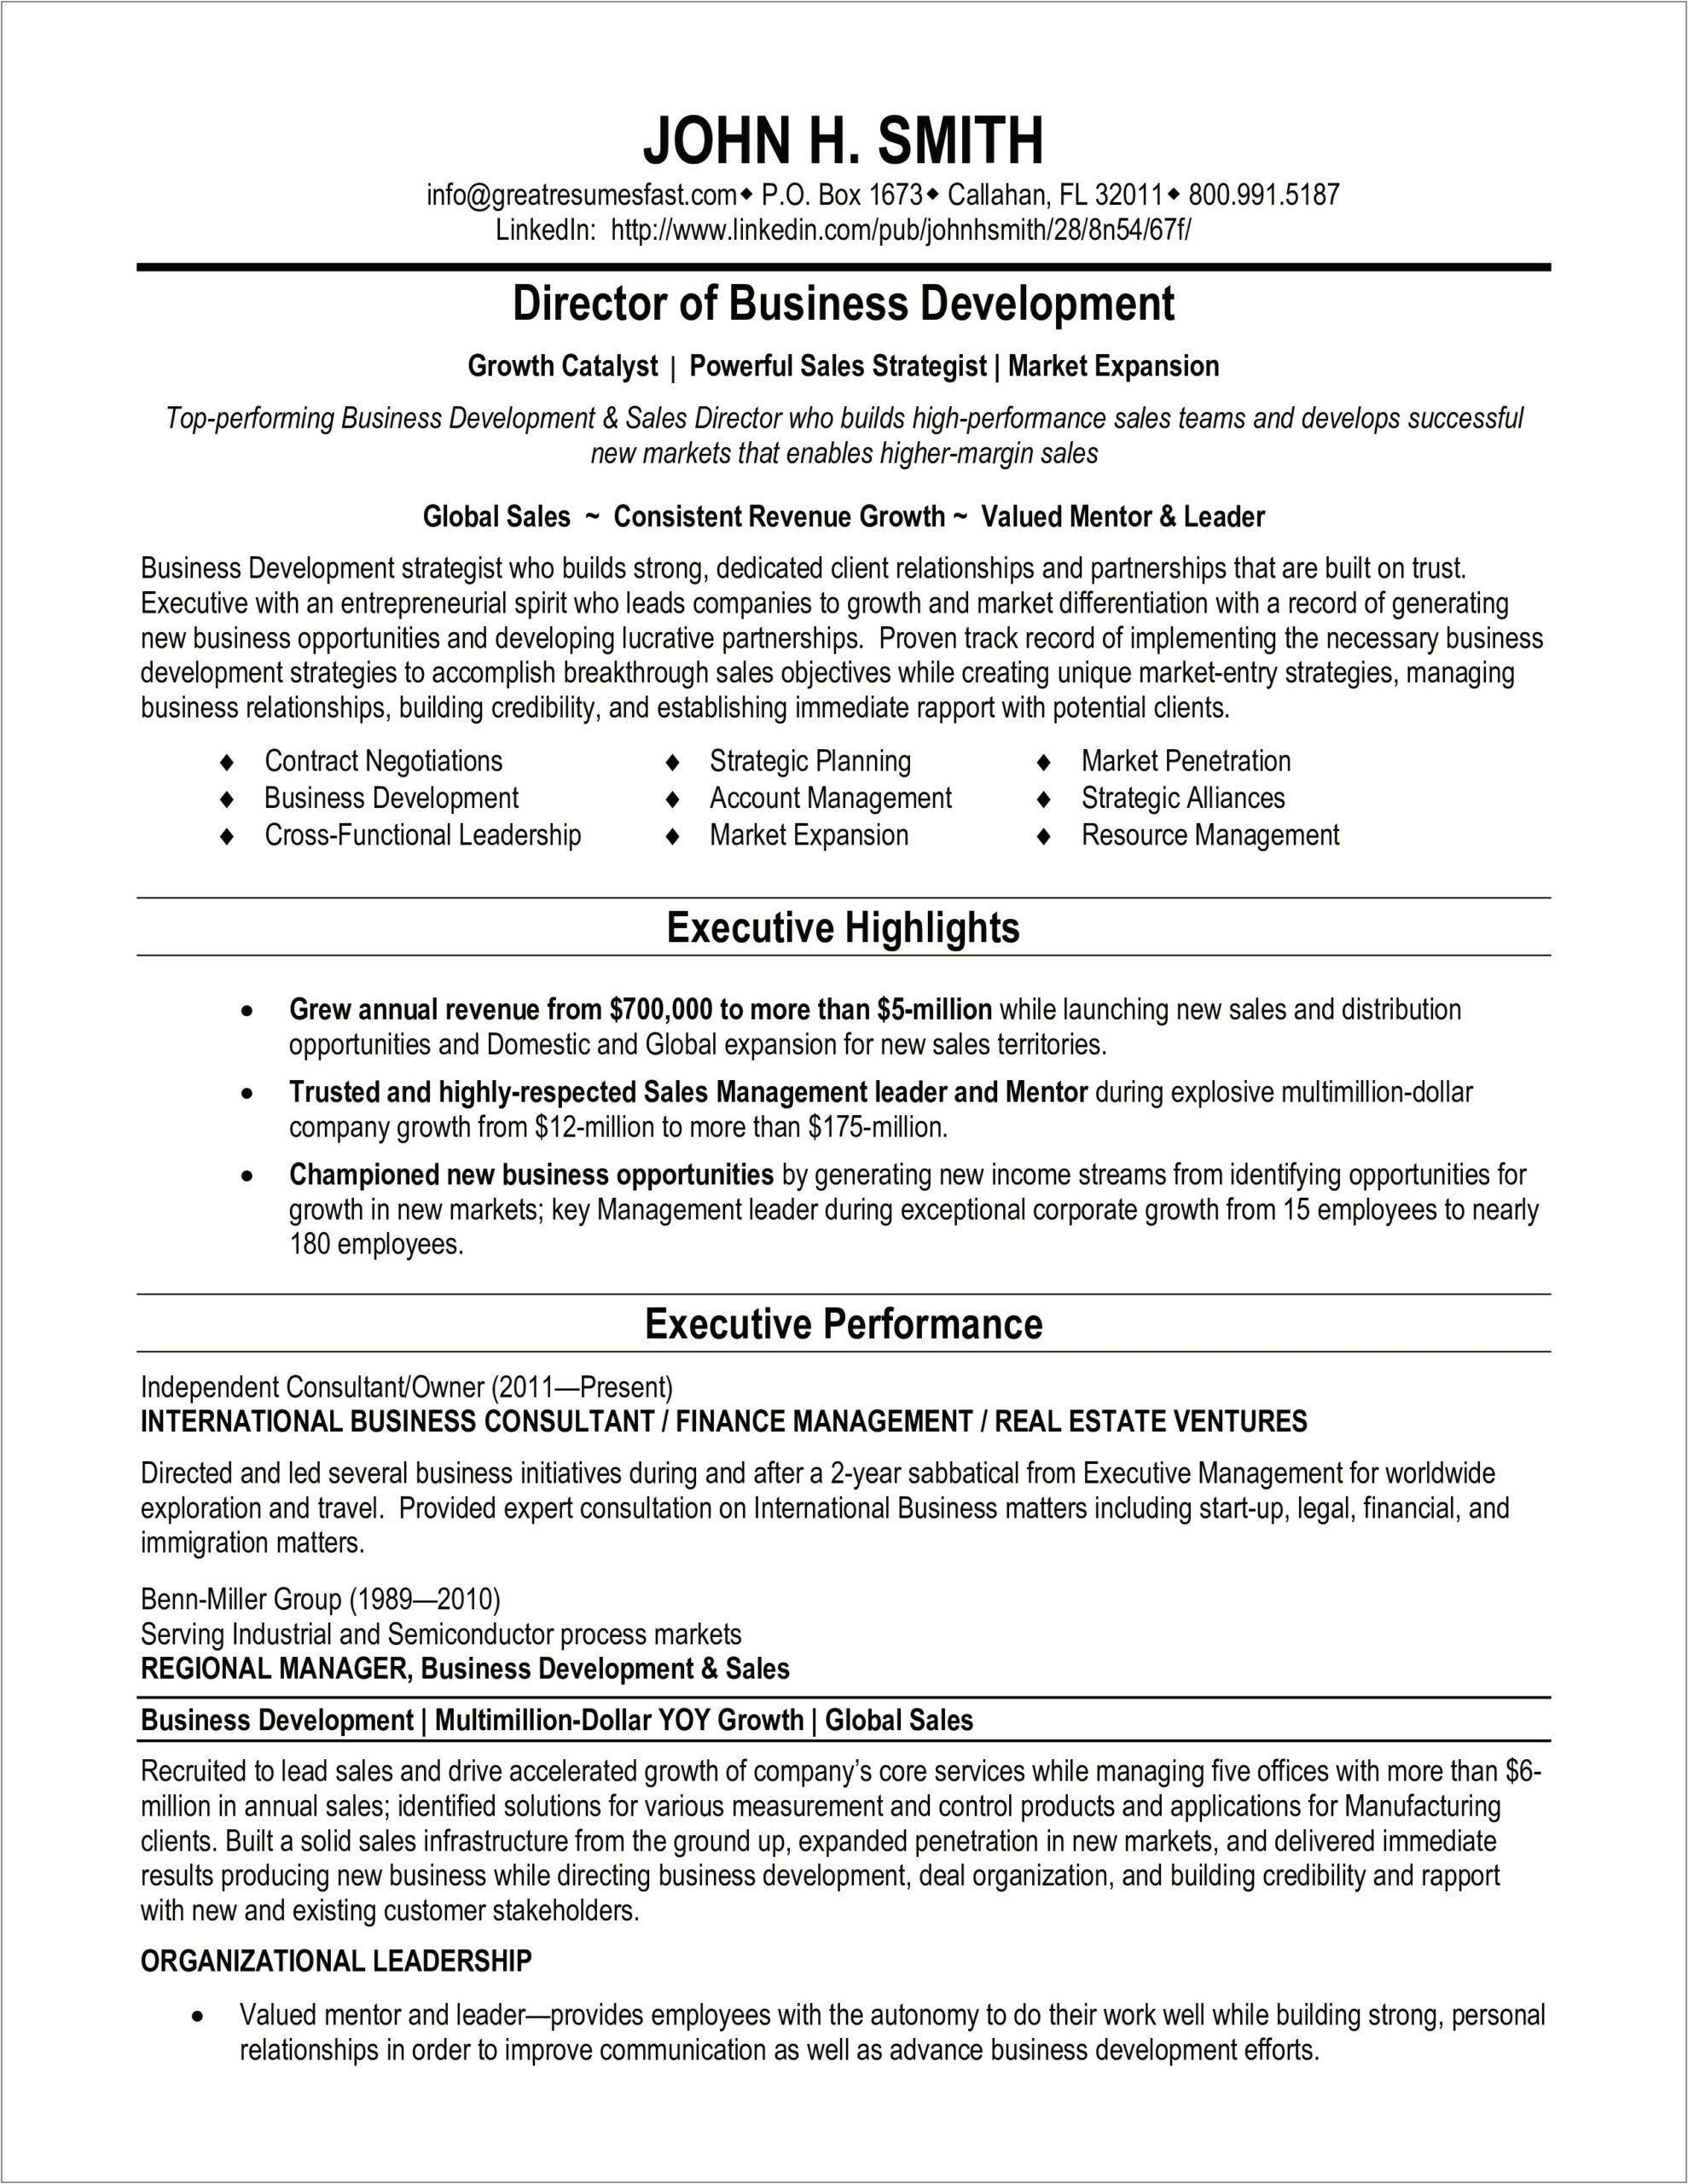 Sample Resume For International Business Management